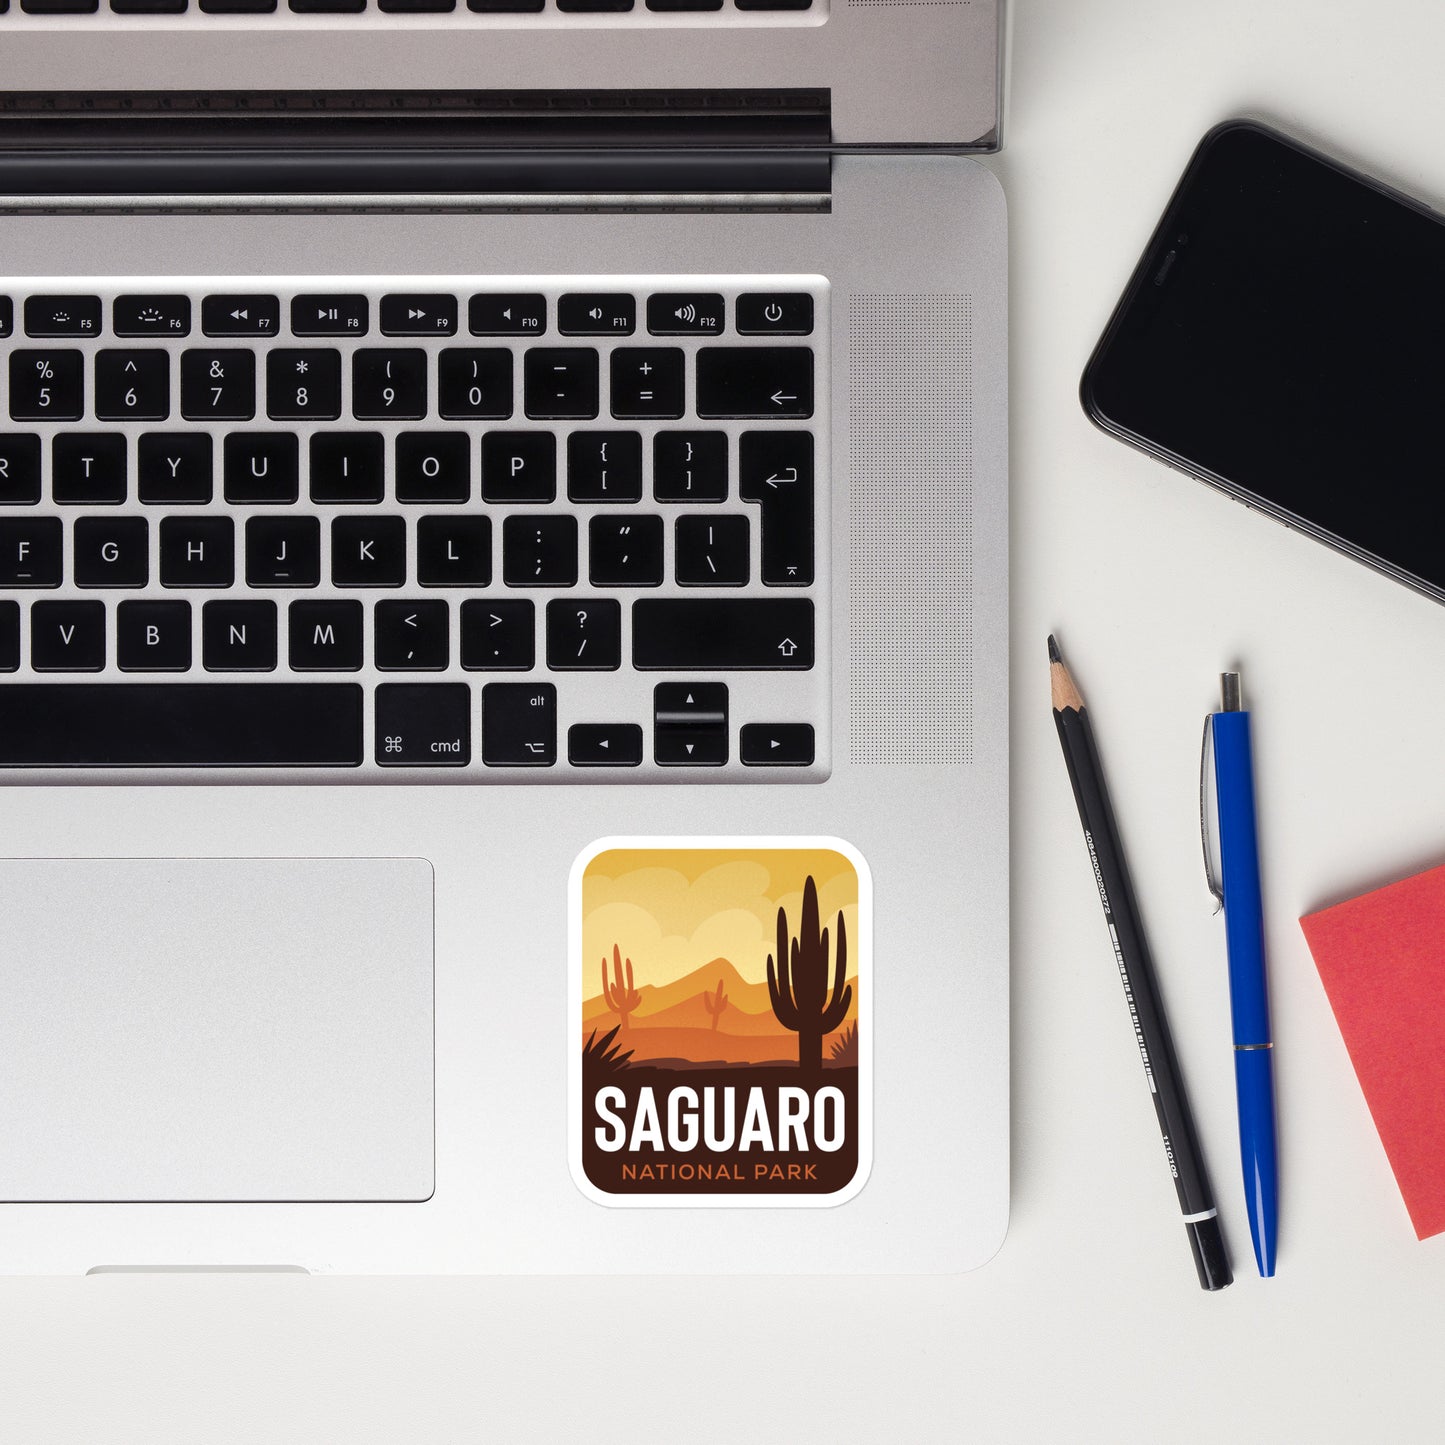 A sticker of Saguaro National Park on a laptop